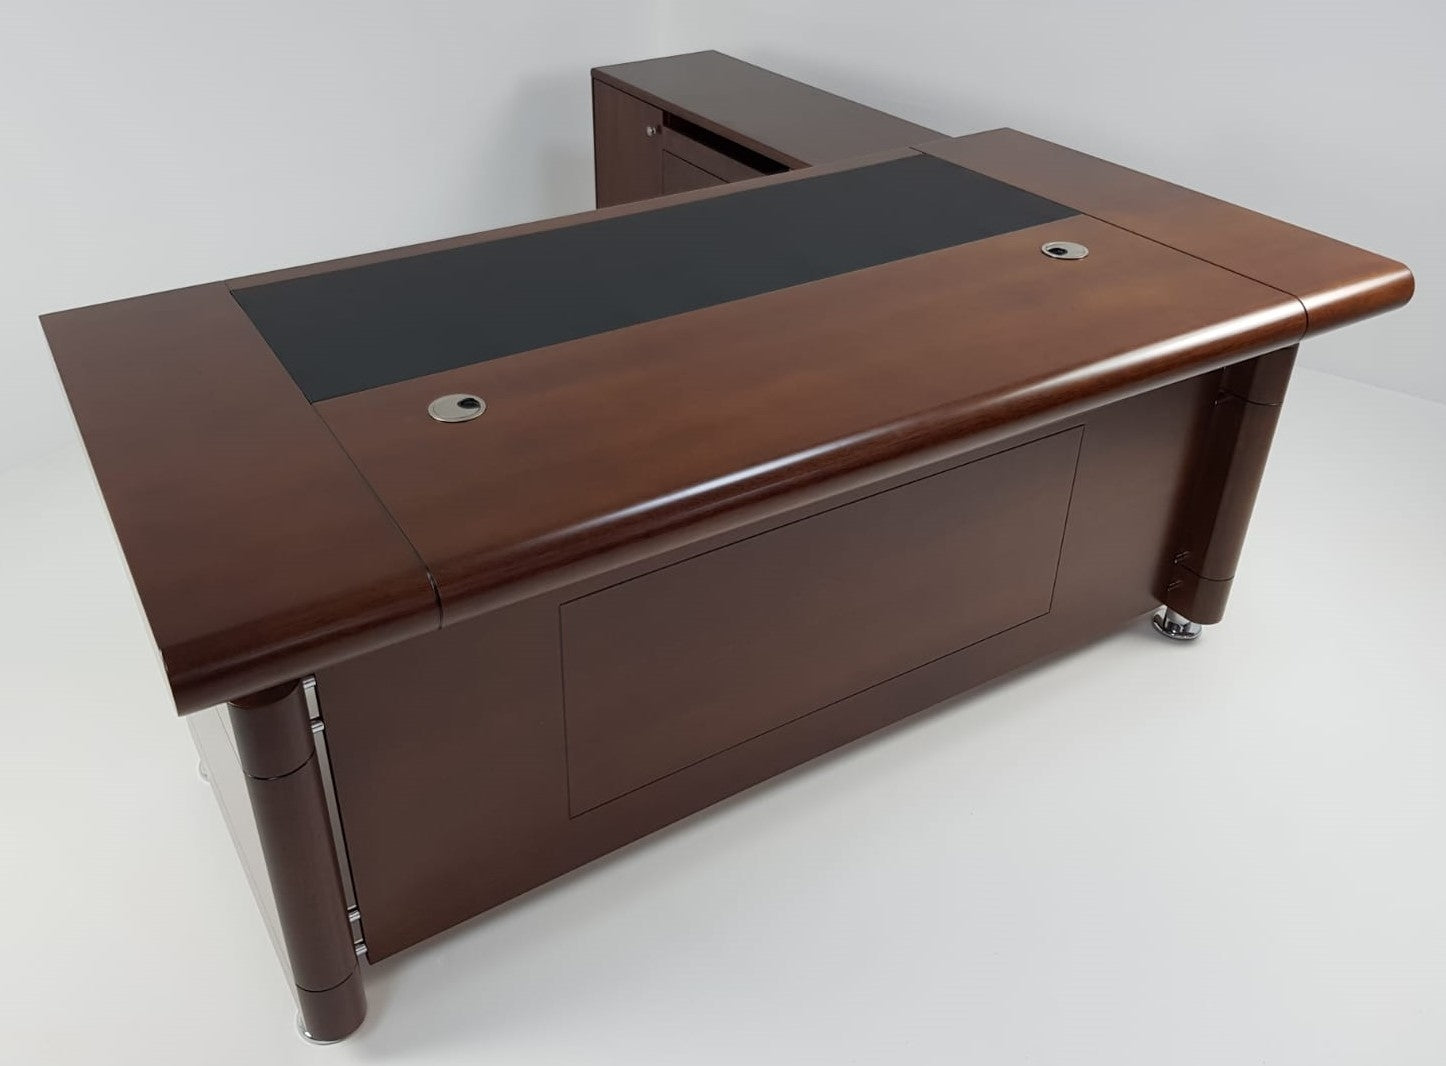 Light Walnut Real Wood Veneer Executive Desk With Roll Top - DES-1861 UK